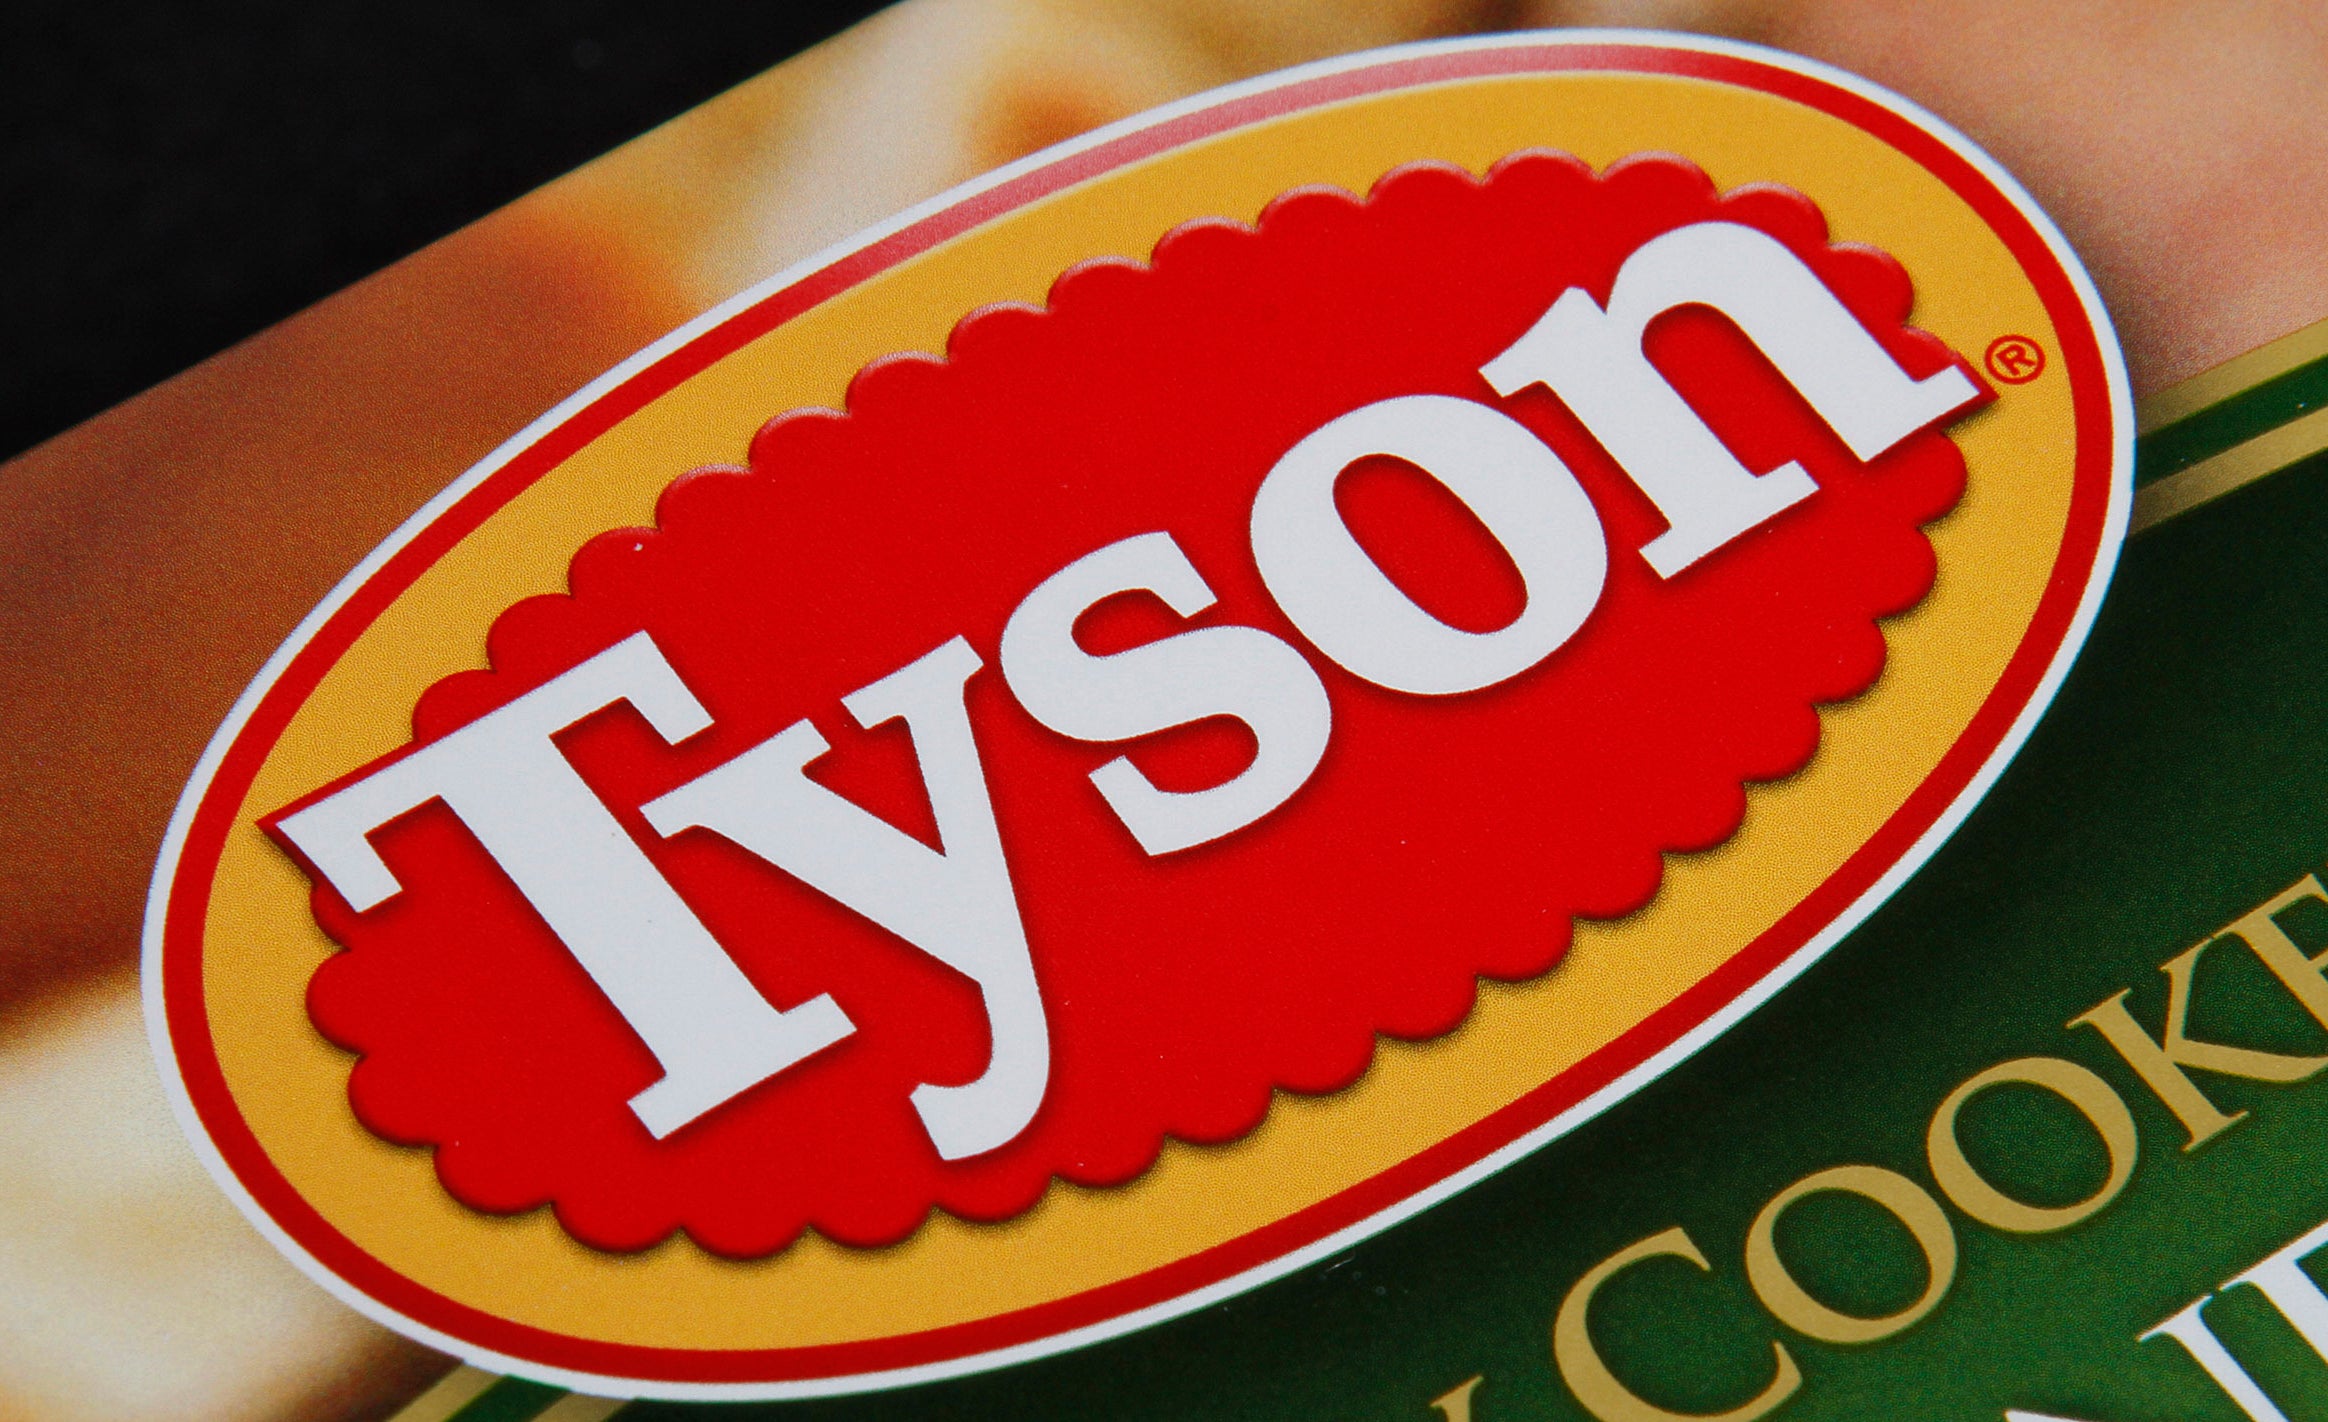 A Tyson food product.